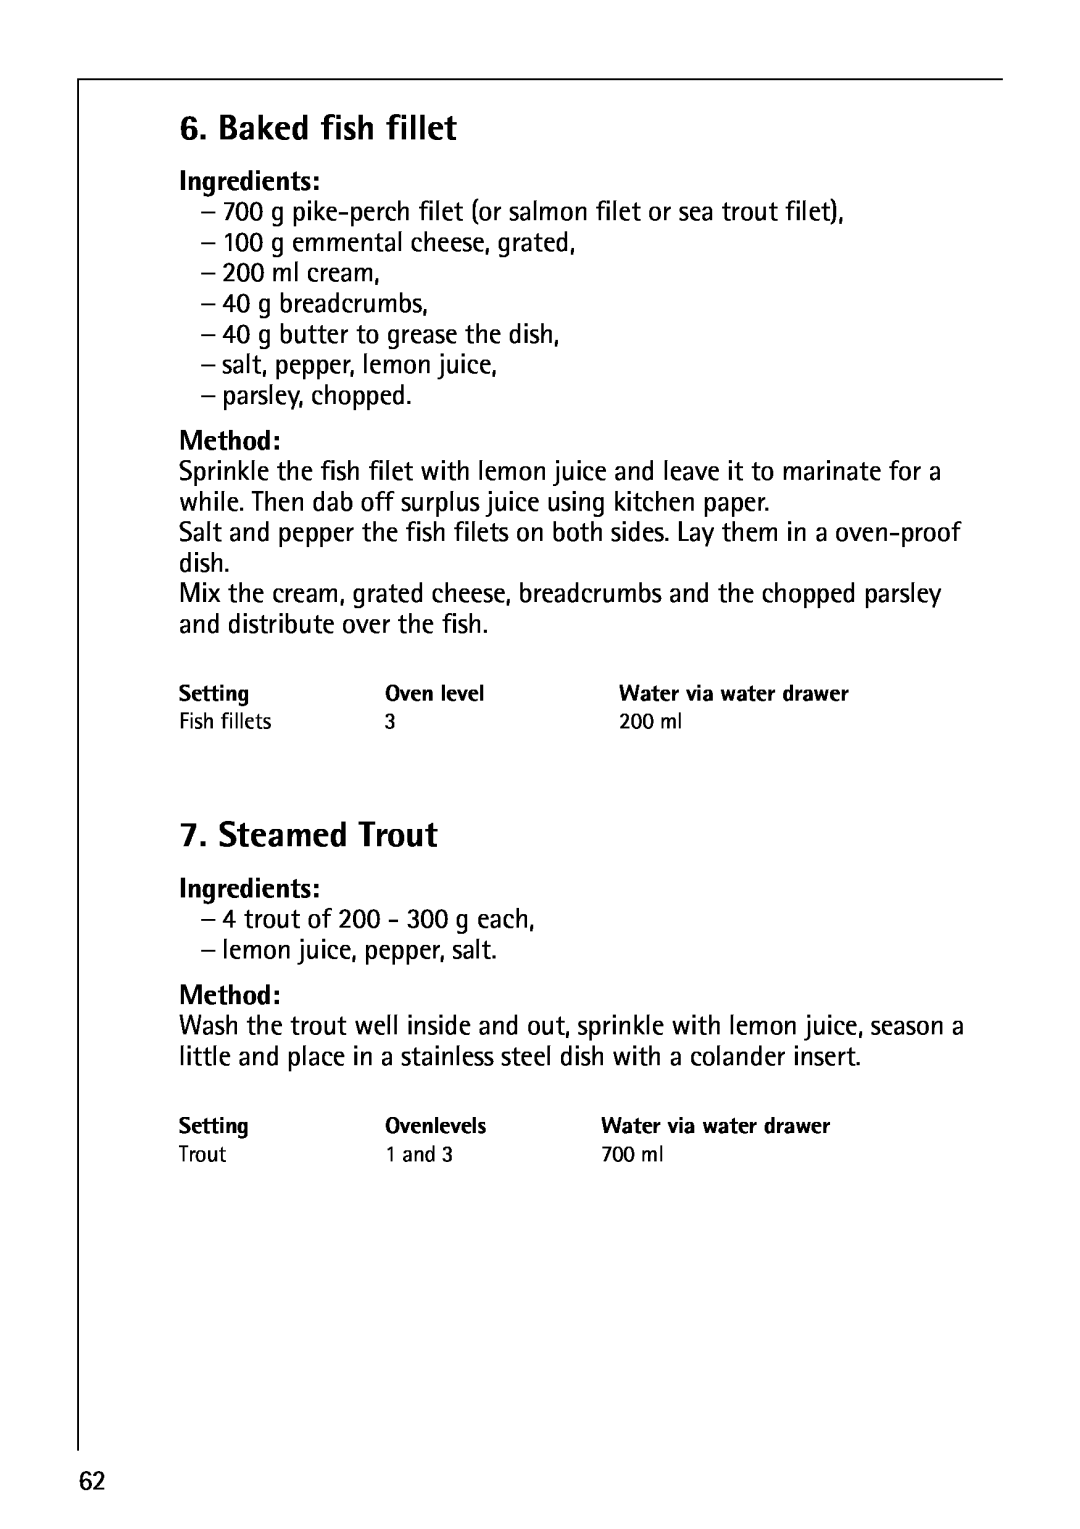 AEG B8920-1 manual Baked fish fillet, Steamed Trout, Ingredients, Method 